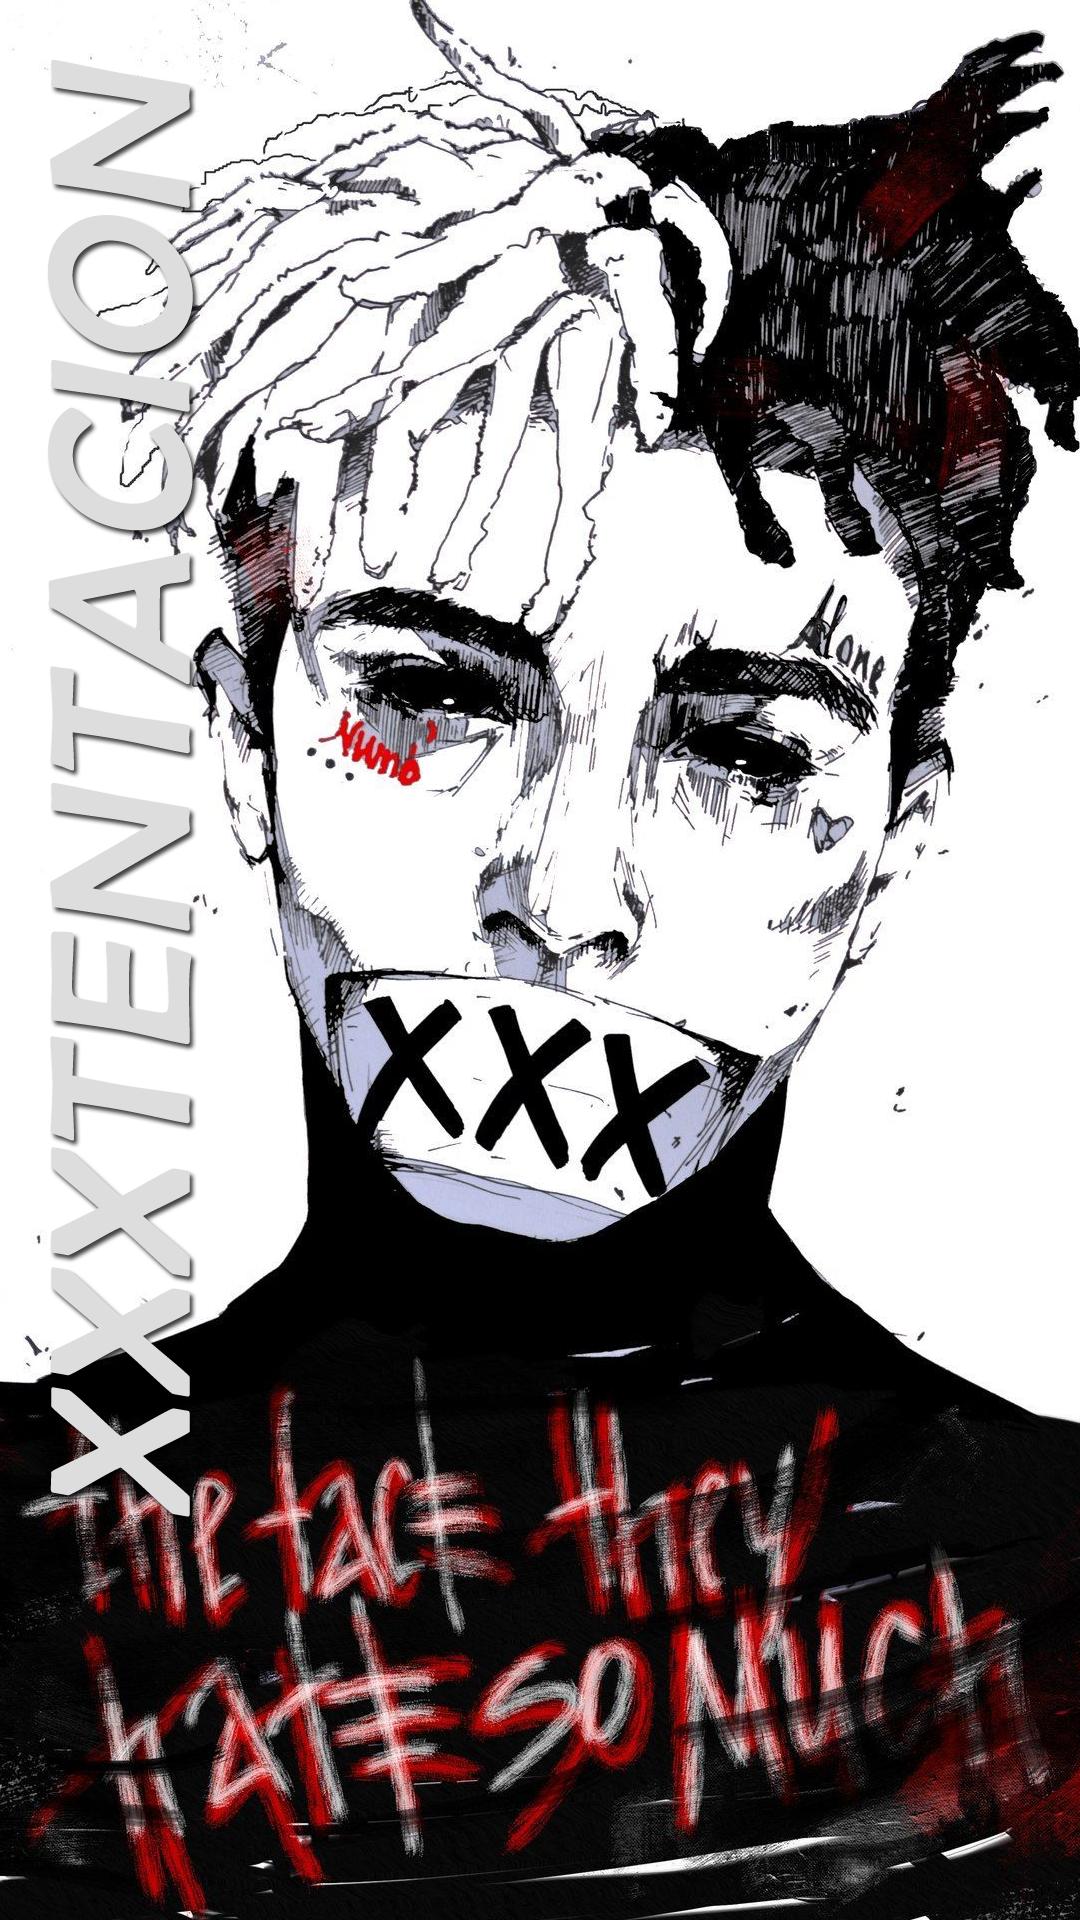 XXXTentacion Wallpaper for Android - APK Download